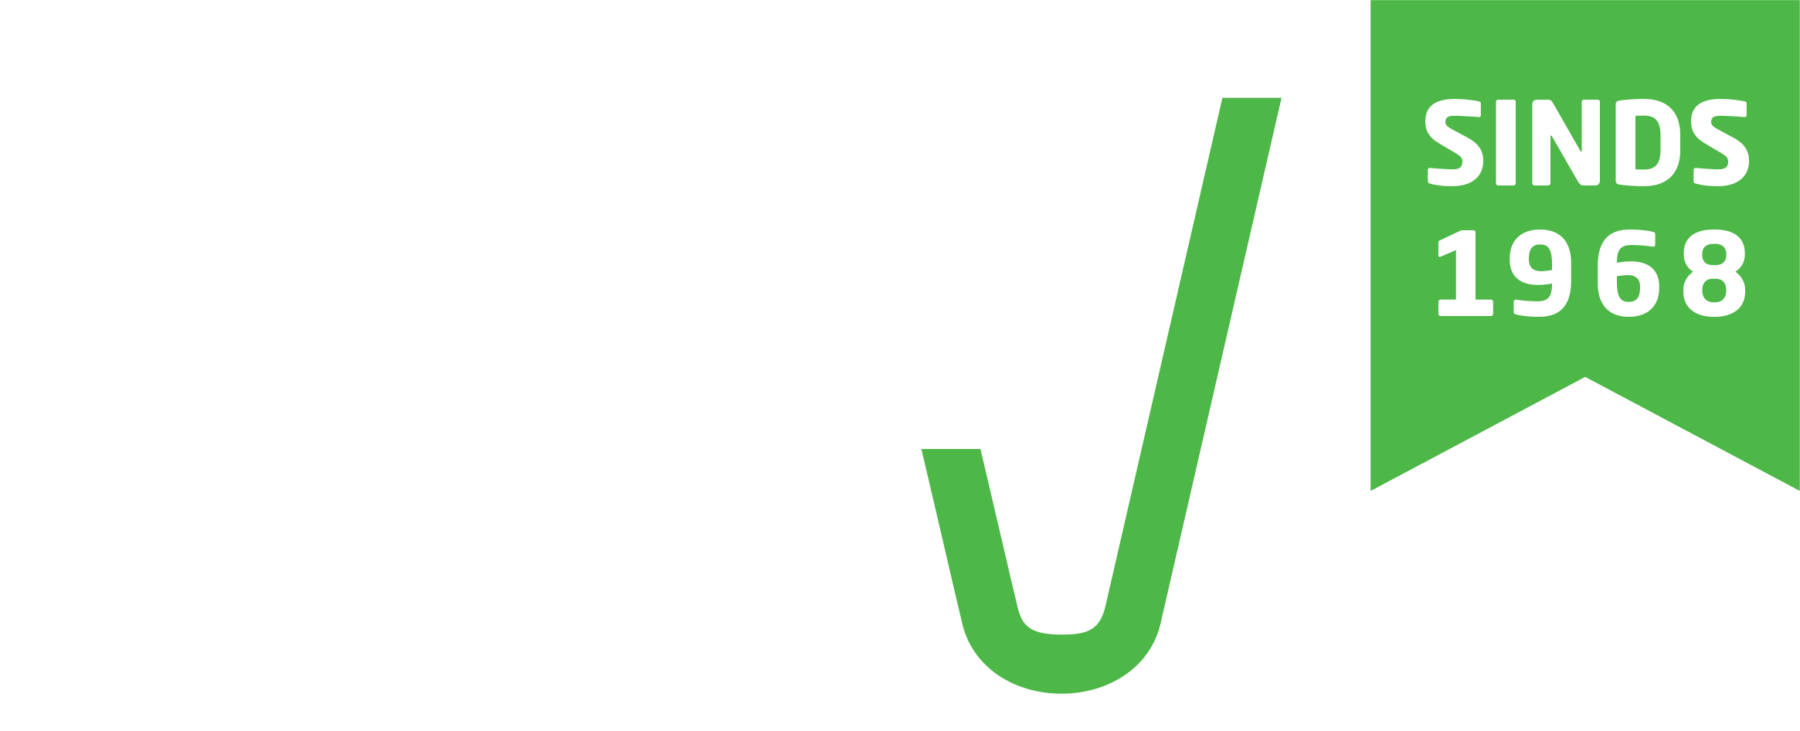 Stichting CAV